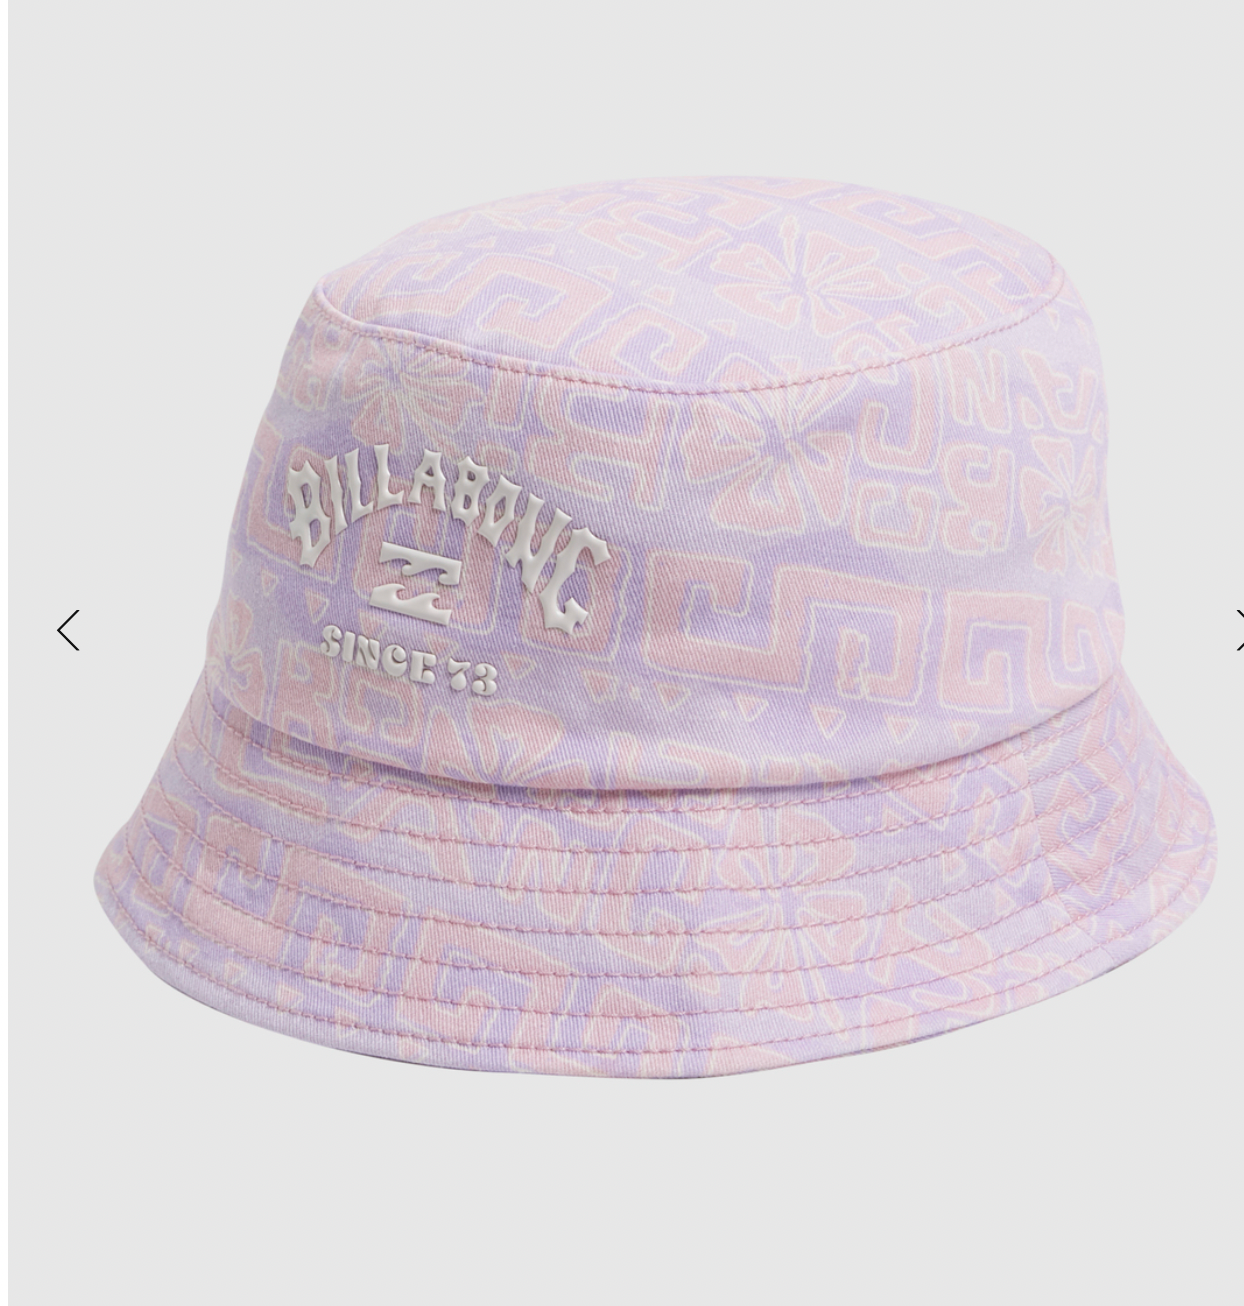 BILLABONG Since 1973 SHORTY  Bucket Hat for Women